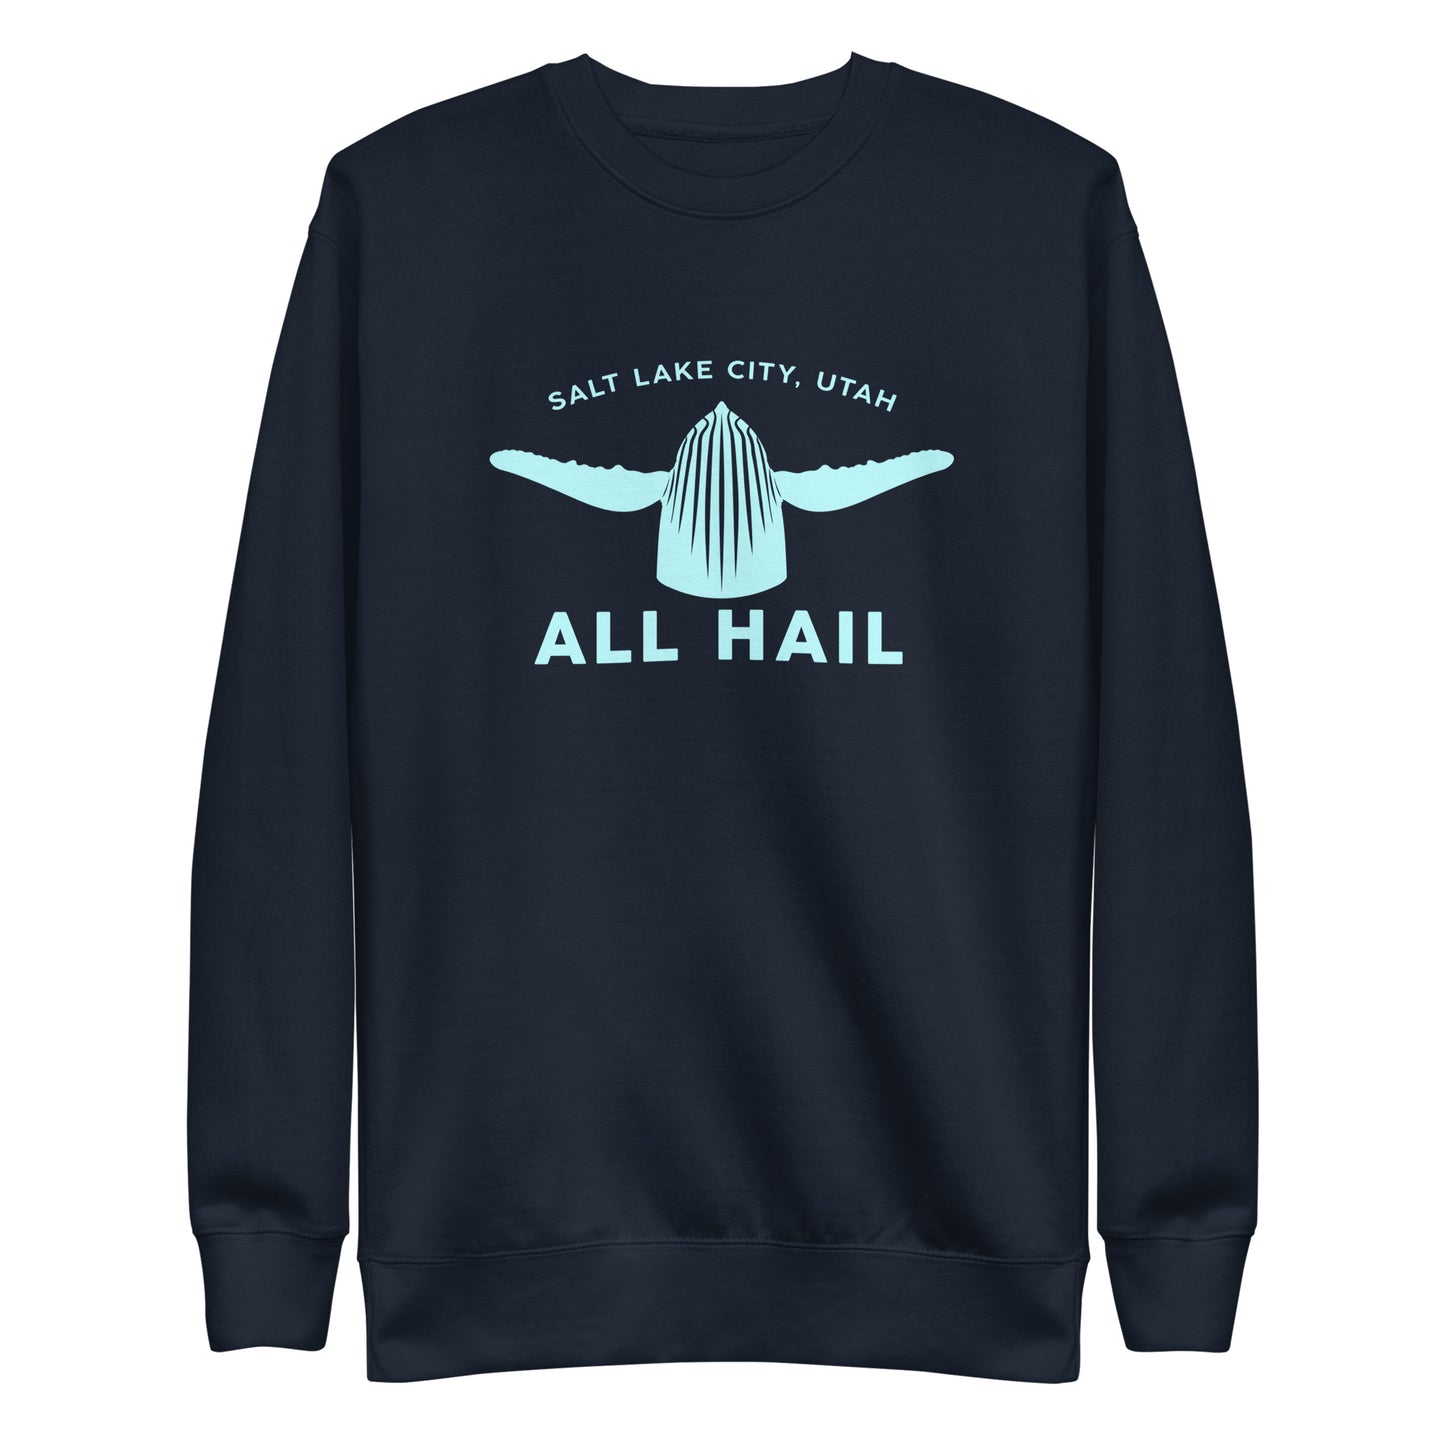 ALL HAIL: Sweatshirt